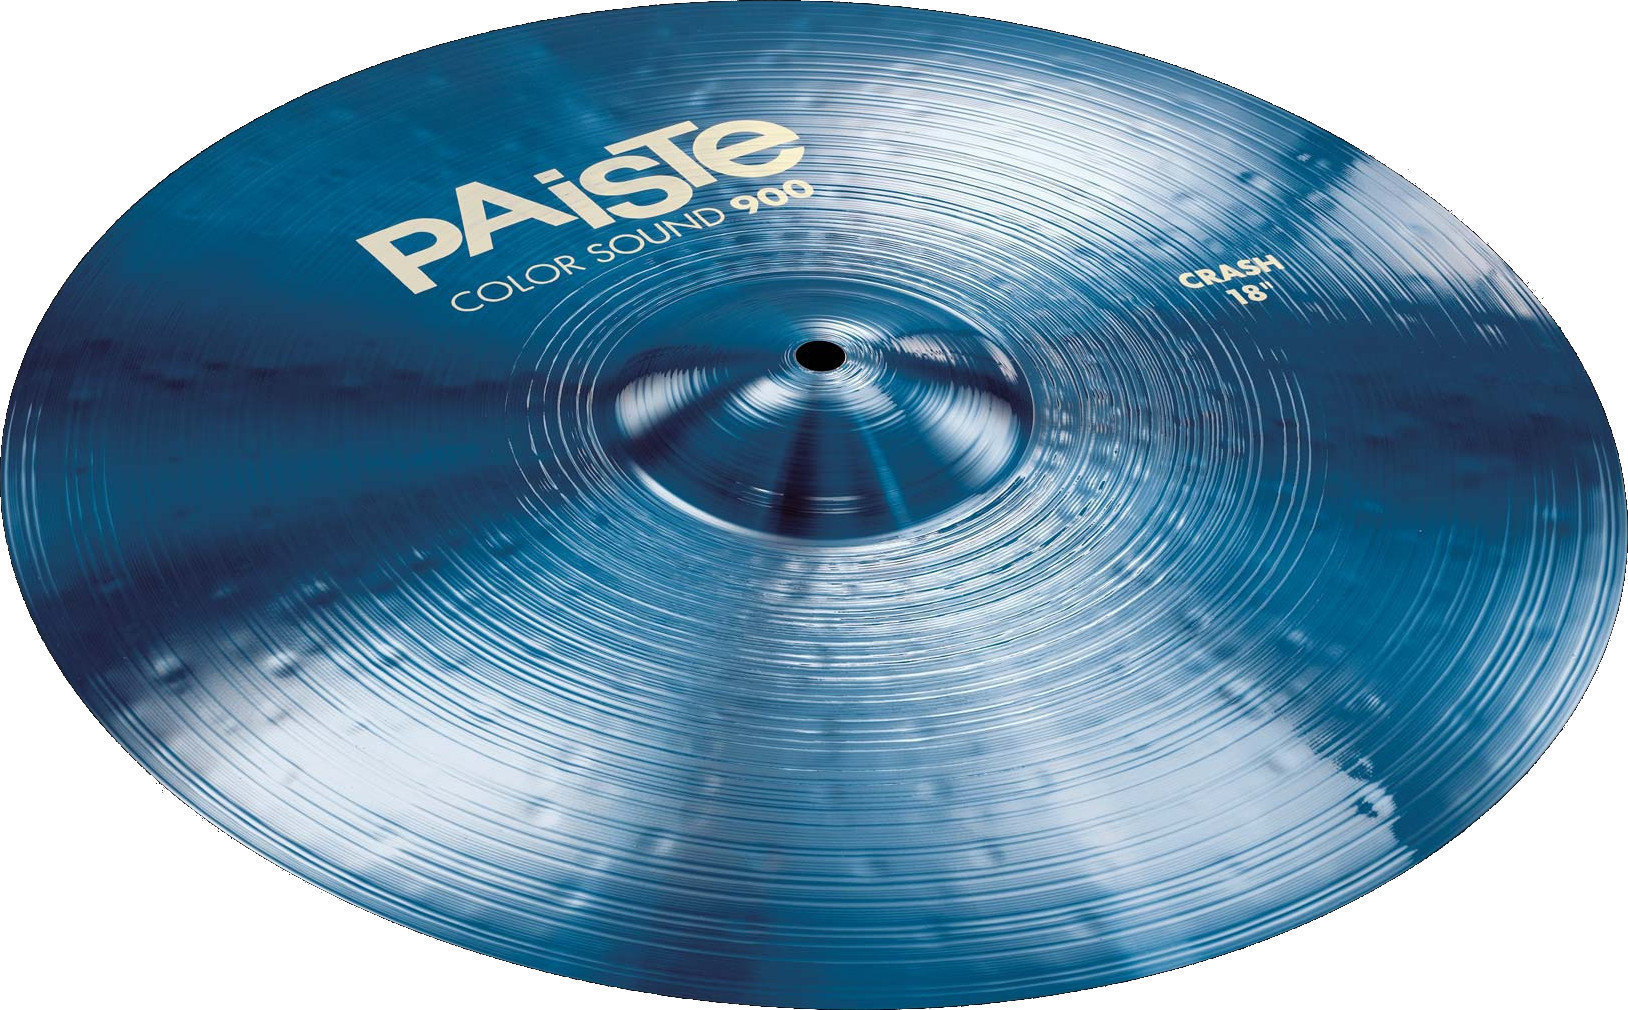 Crash Cymbal Paiste Color Sound 900 Crash Cymbal 19" Blue